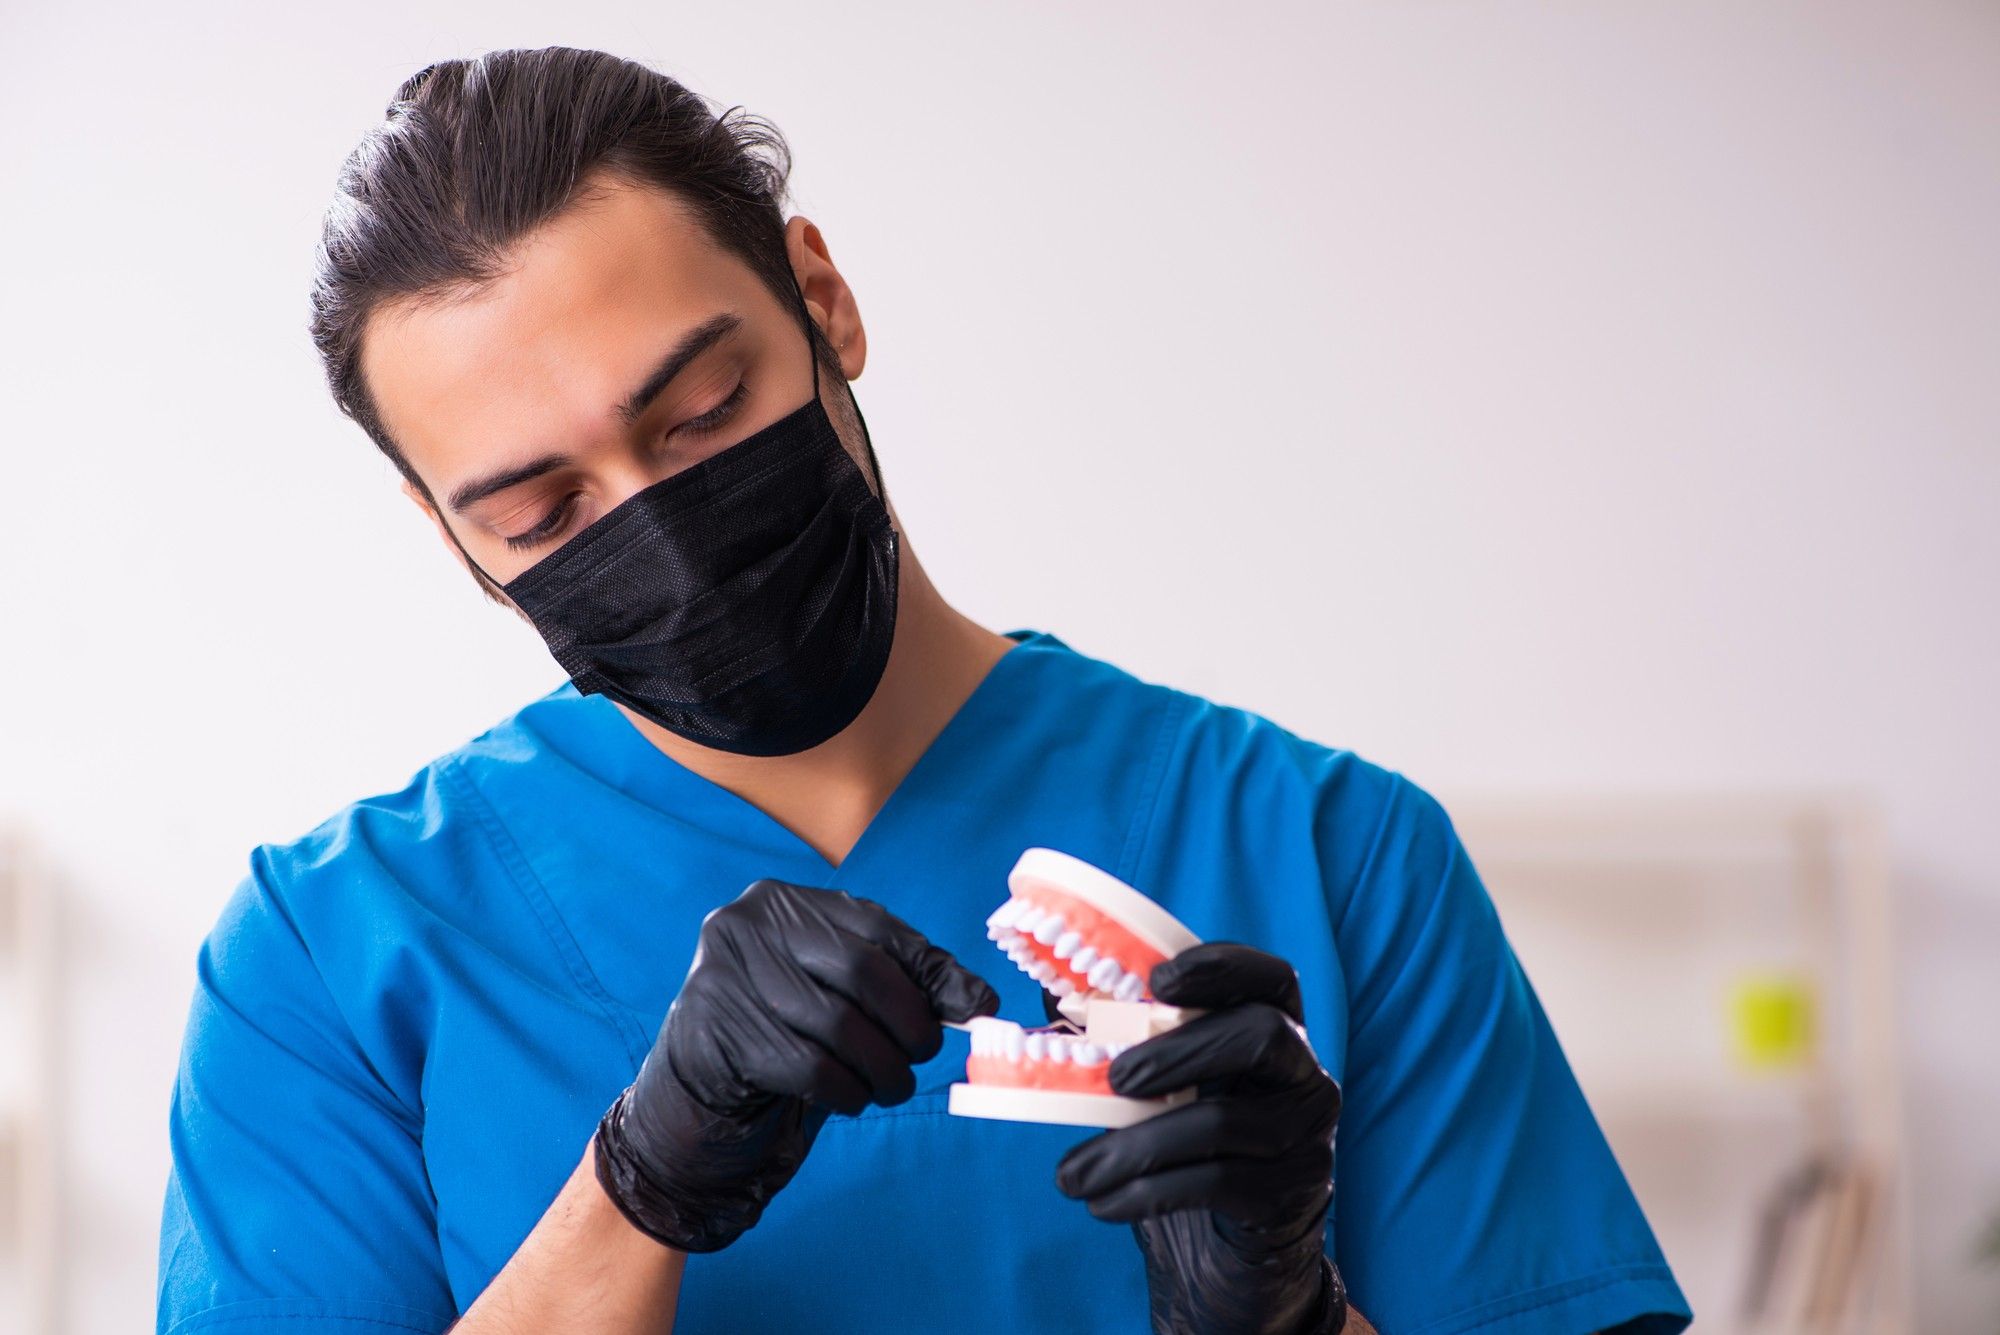 Snow Teeth Whitening may not claim to offer coronavirus protection.